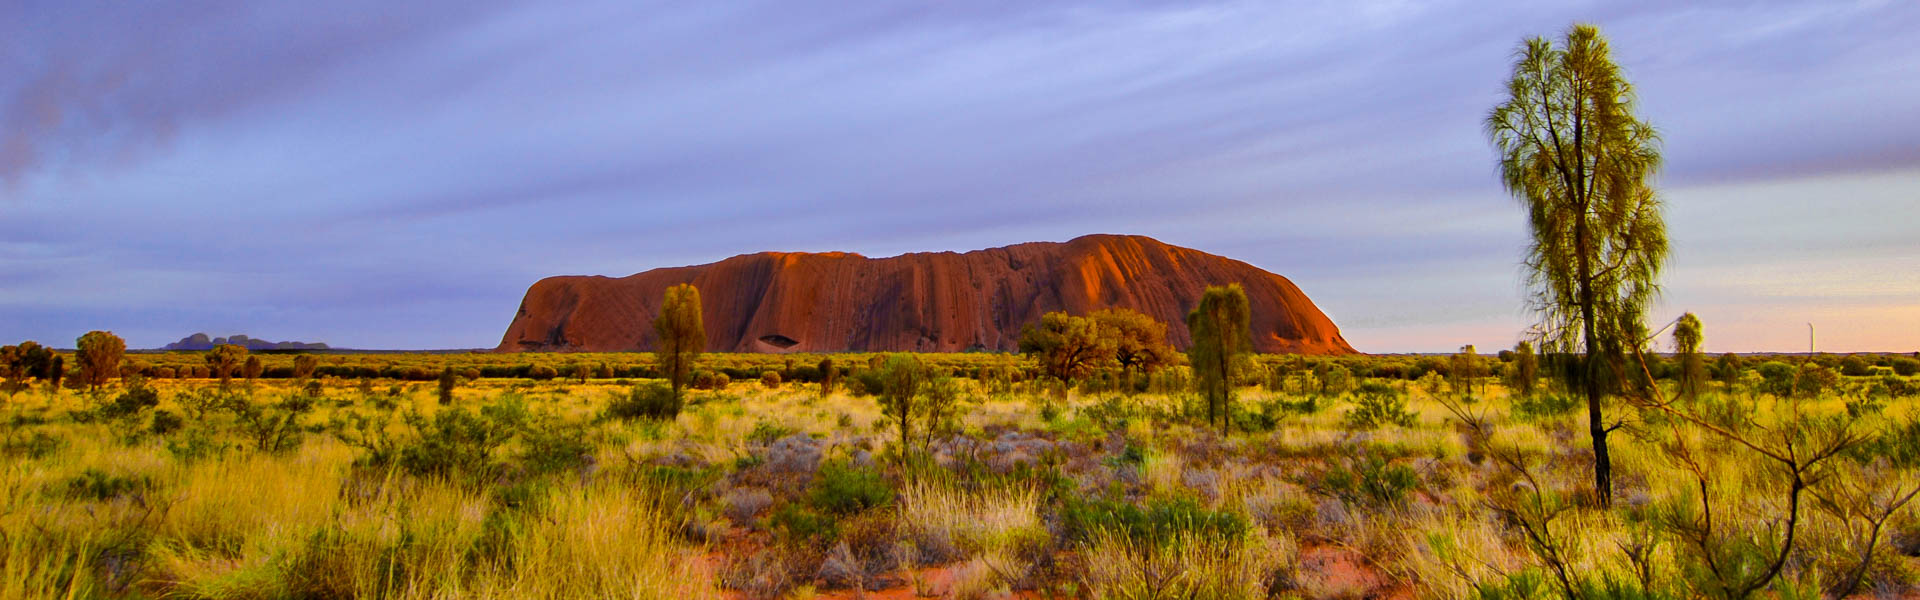 The Uluru at sunrise